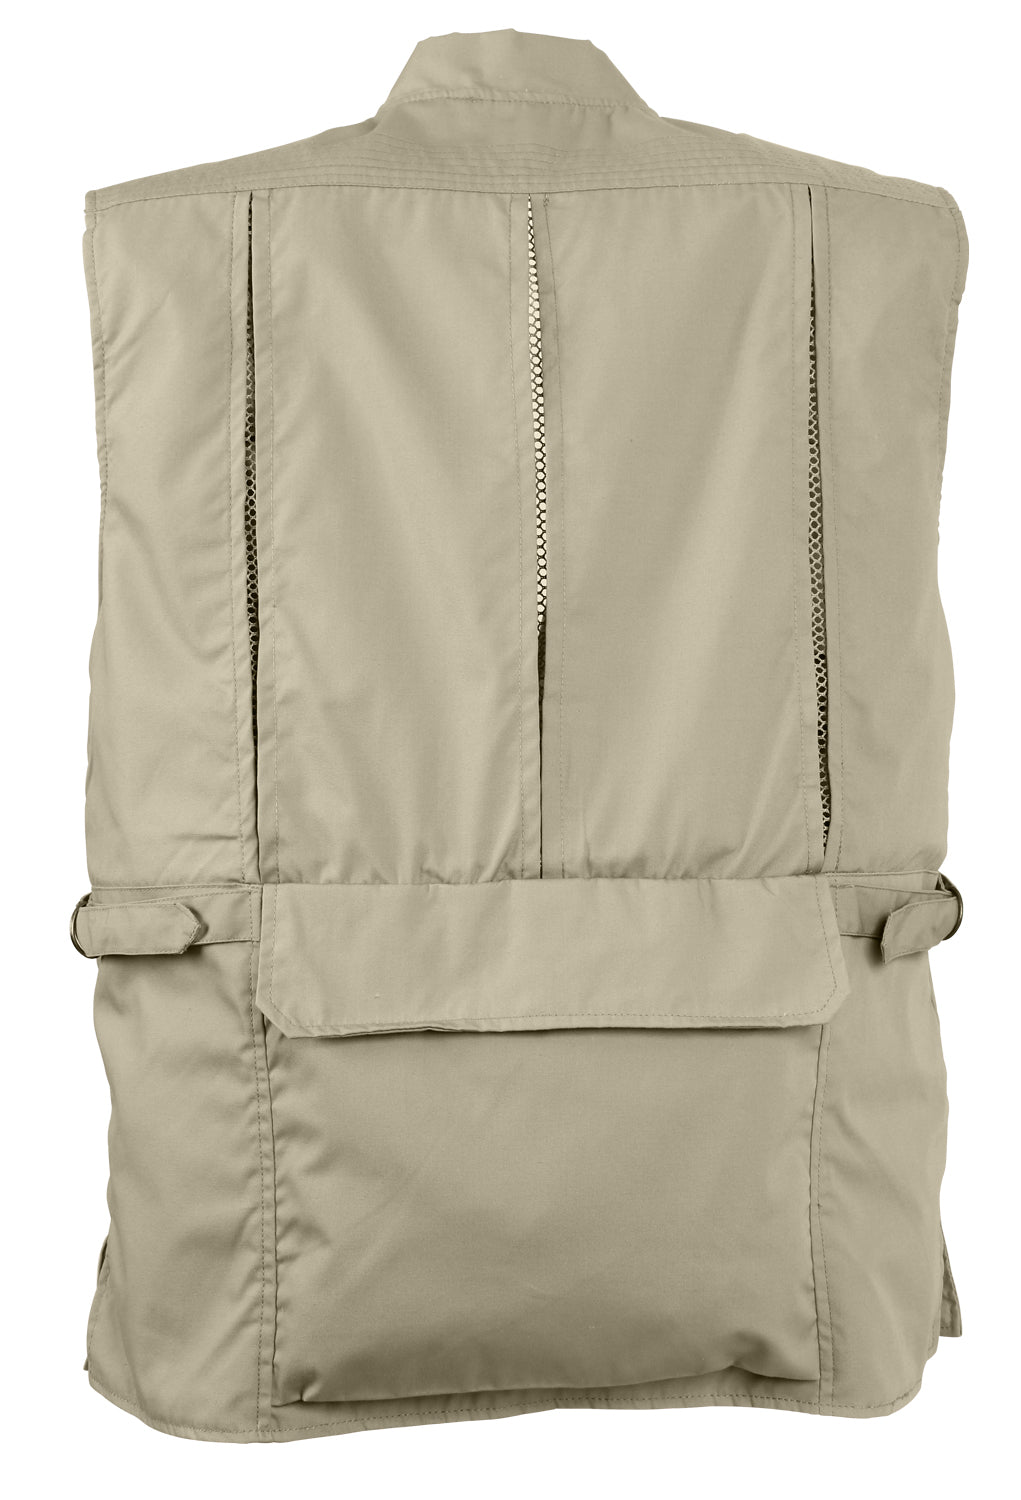 Plain Clothes Concealed Carry Tactical Cargo Vest - Black Khaki or Olive